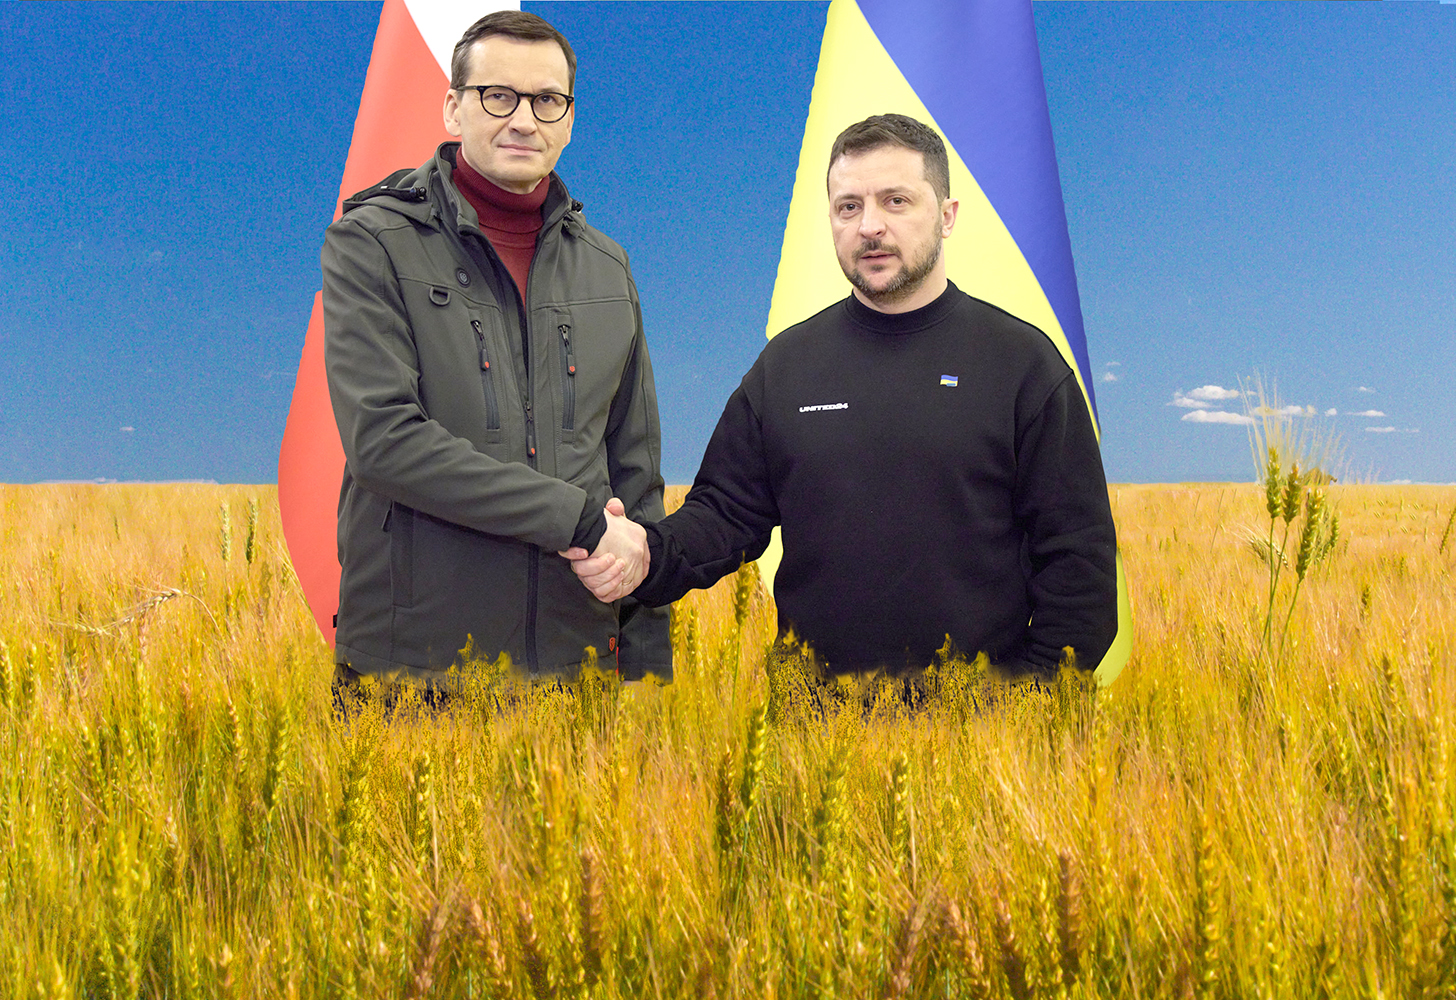 Poles Ukrainians Wheat Field Image own work